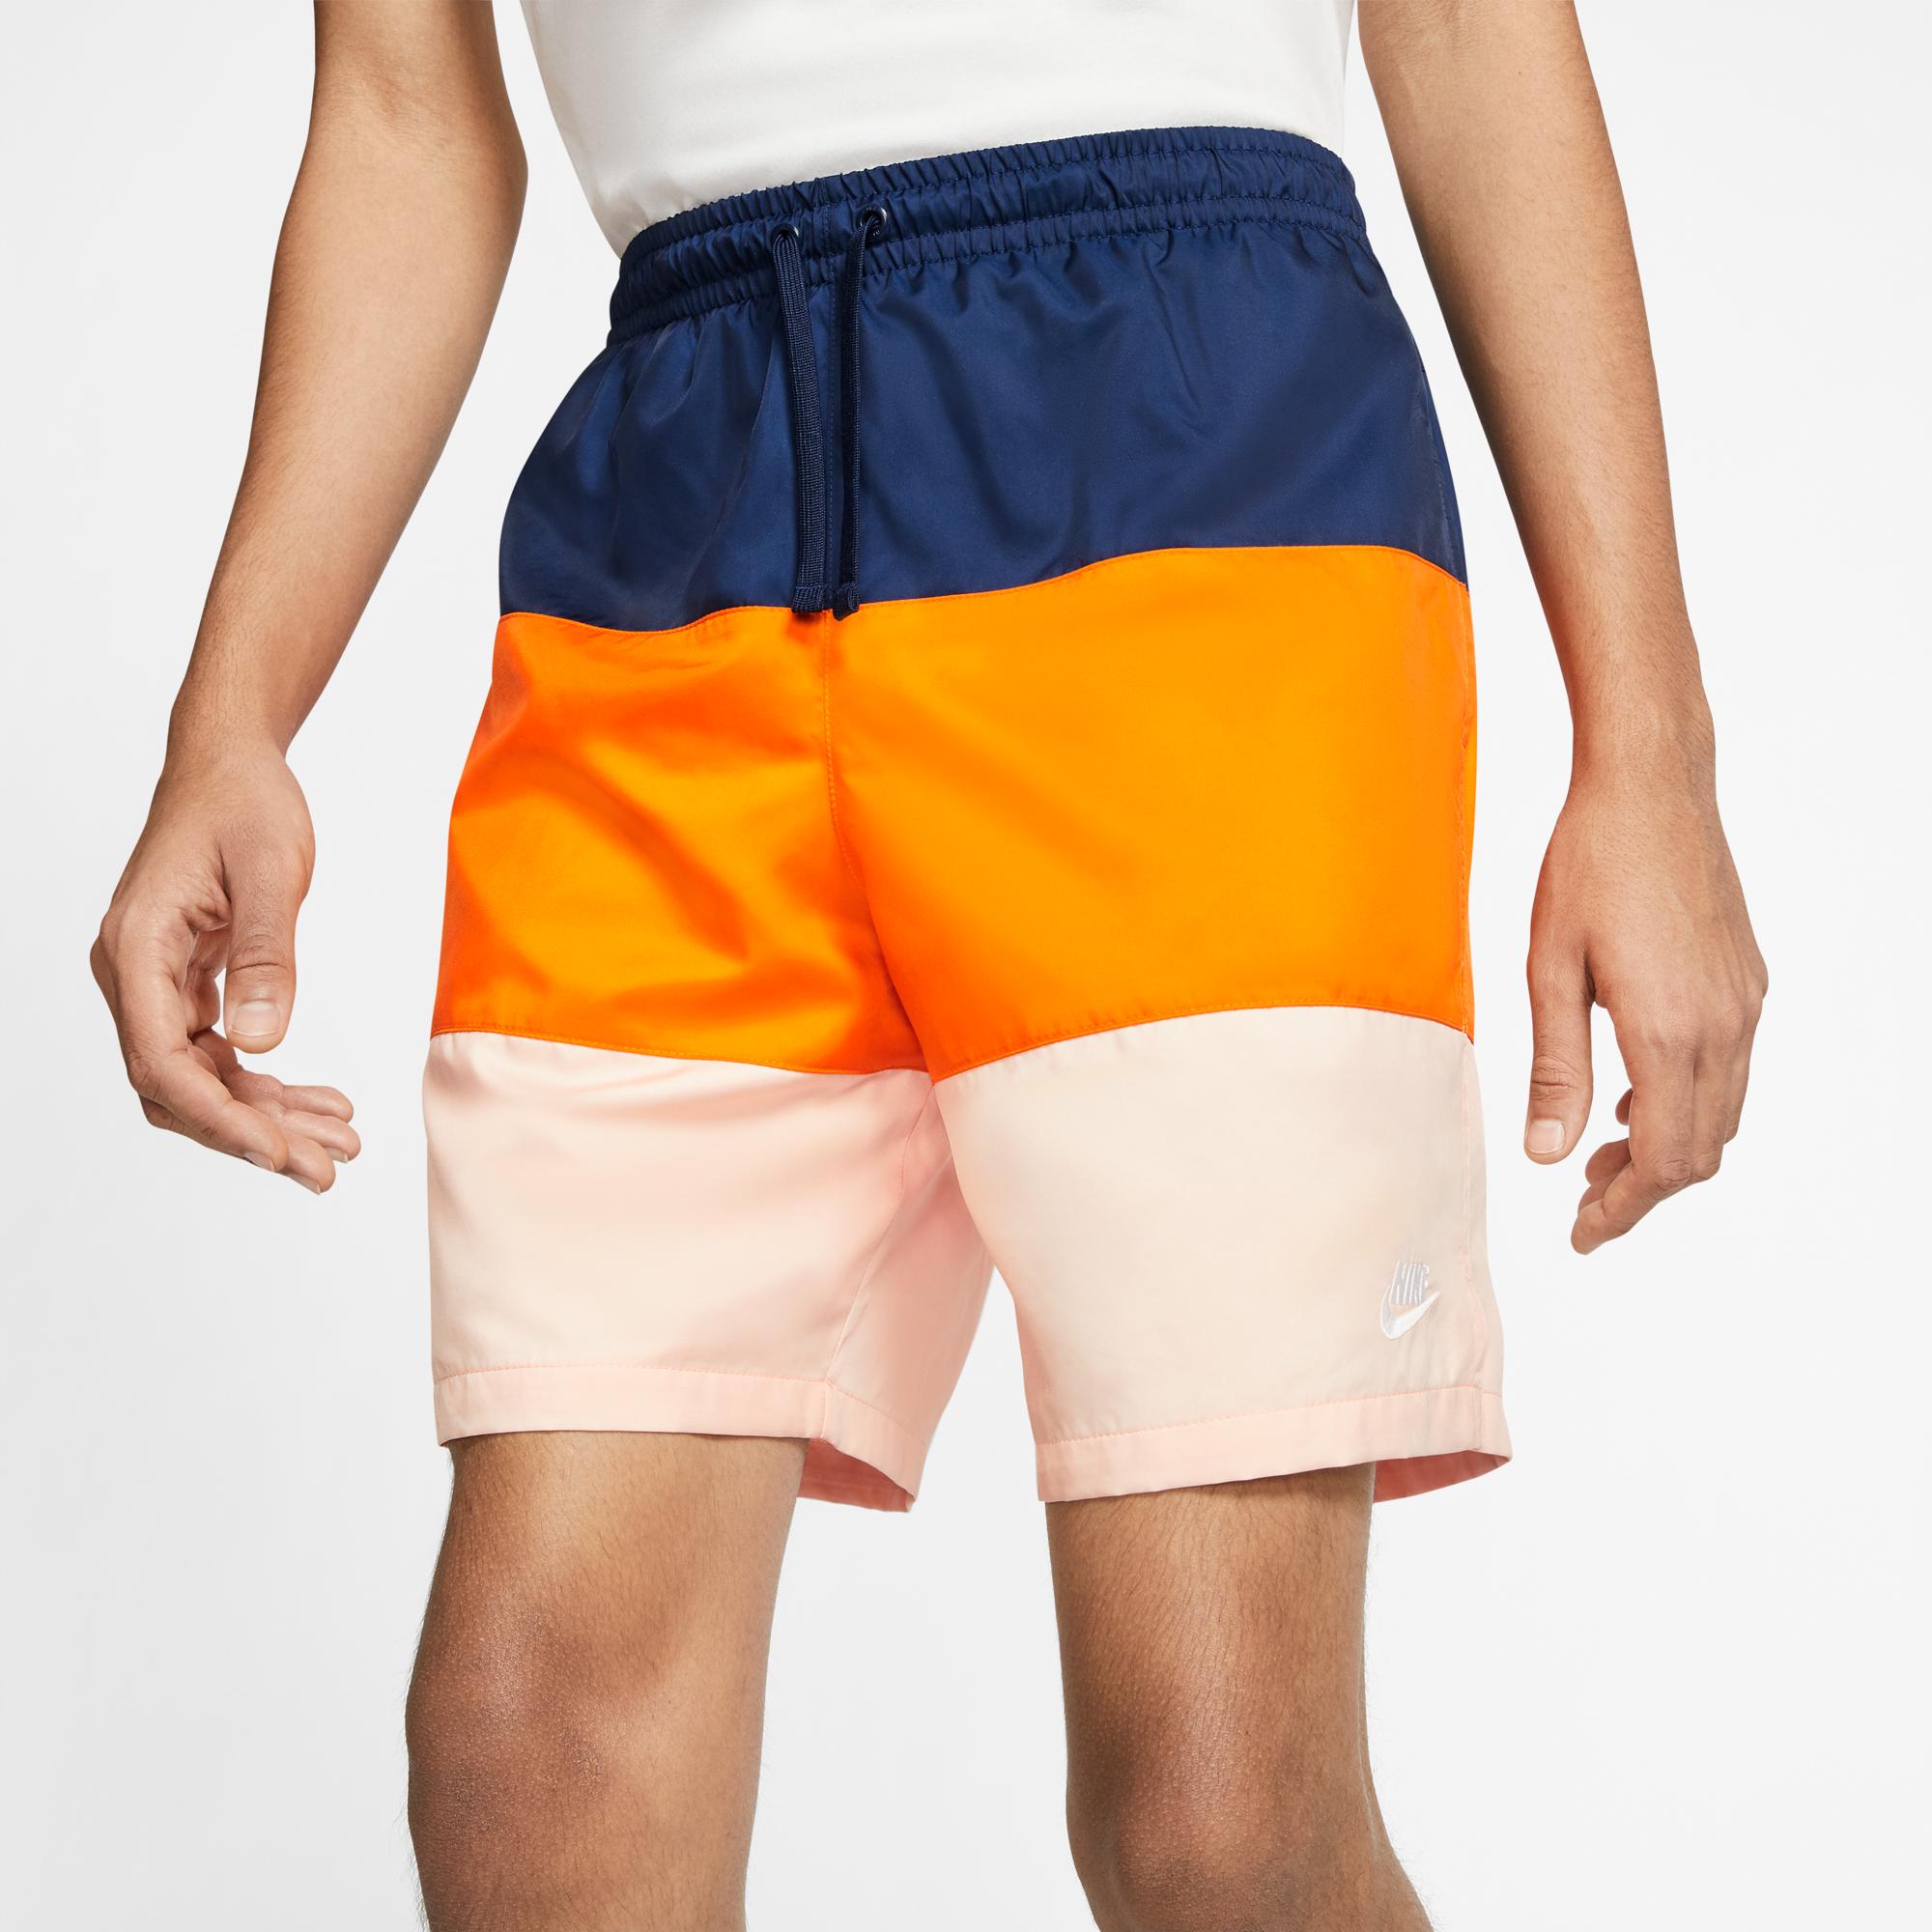 Шорты Nike Orange. Nike Sportswear shorts Woven. Шорты Nike ACG мужские оранжевые. Шорты найк нейлоновые. Short edition